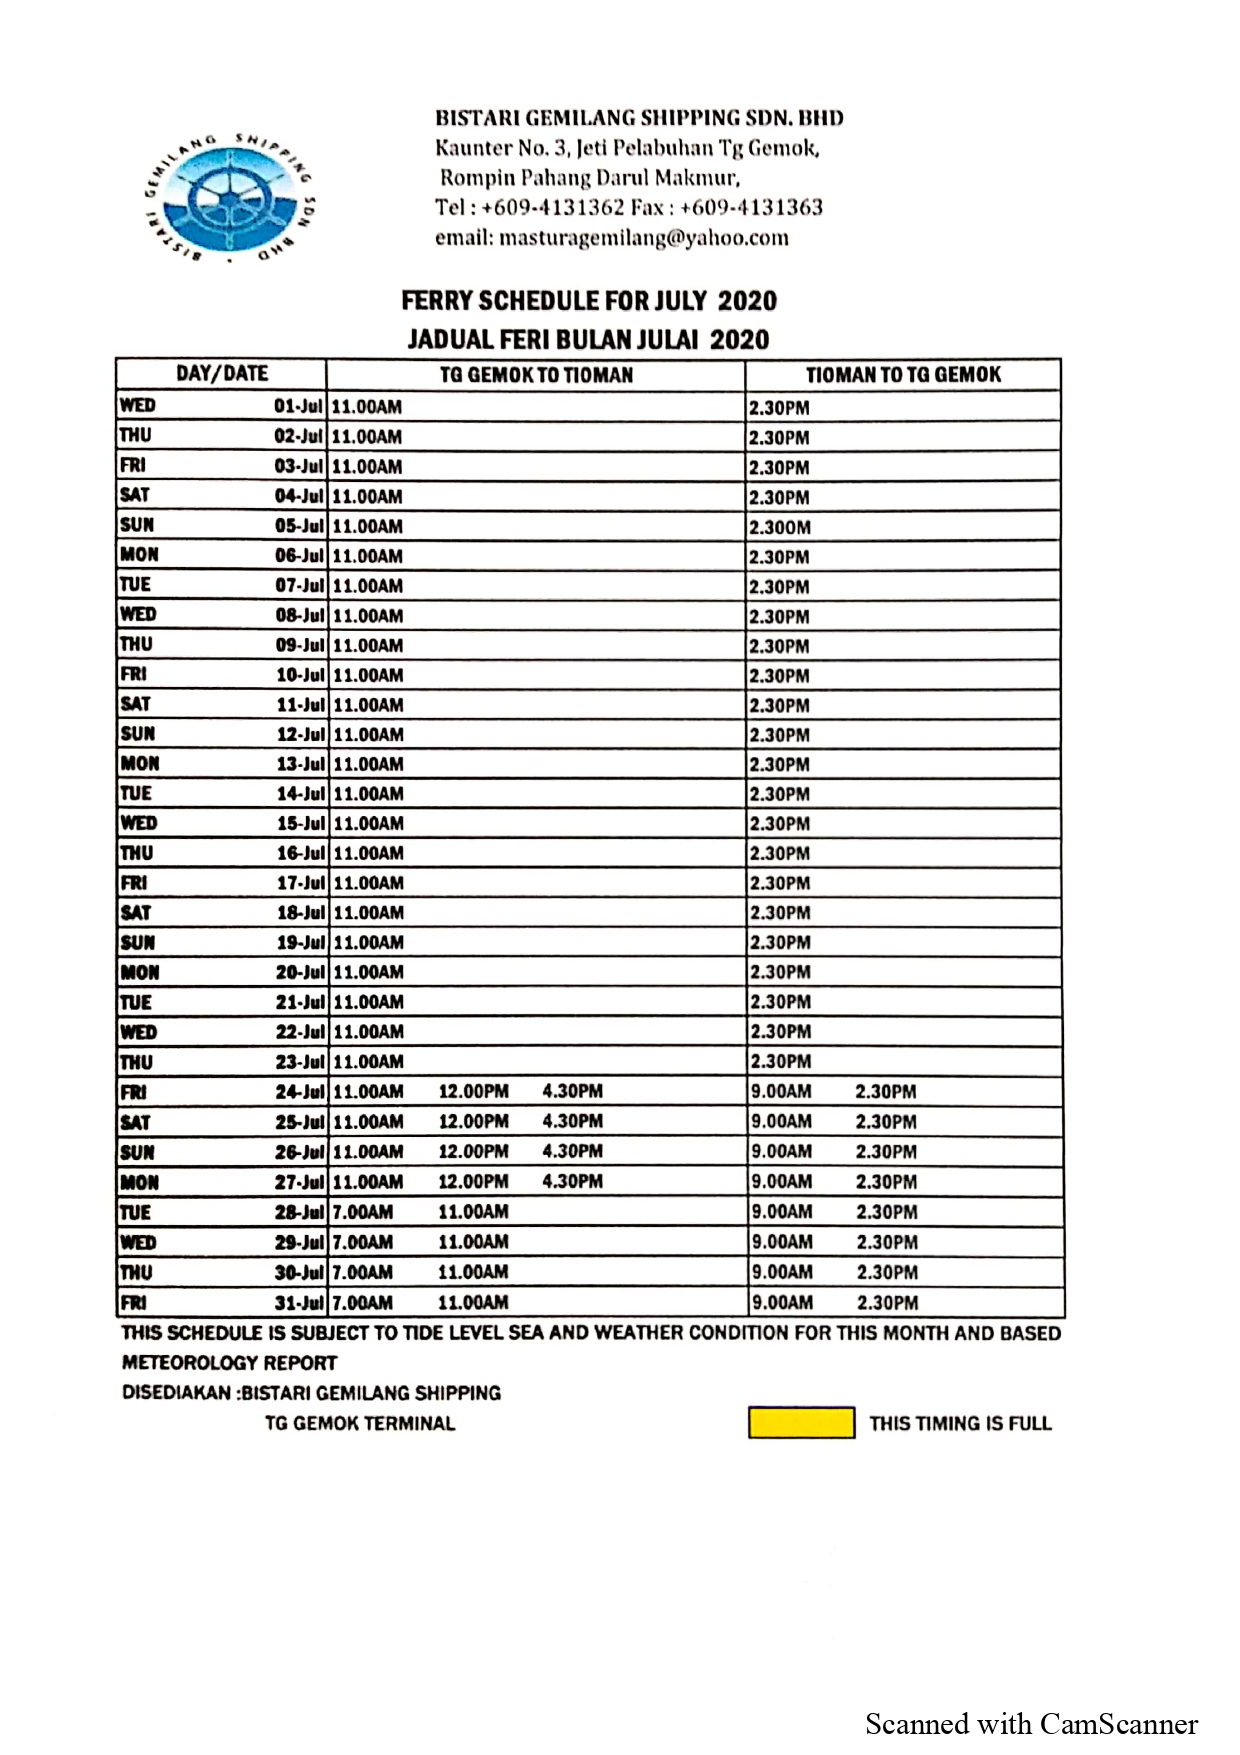 Tanjung Gemok-Tioman Ferry Schedule July 2020